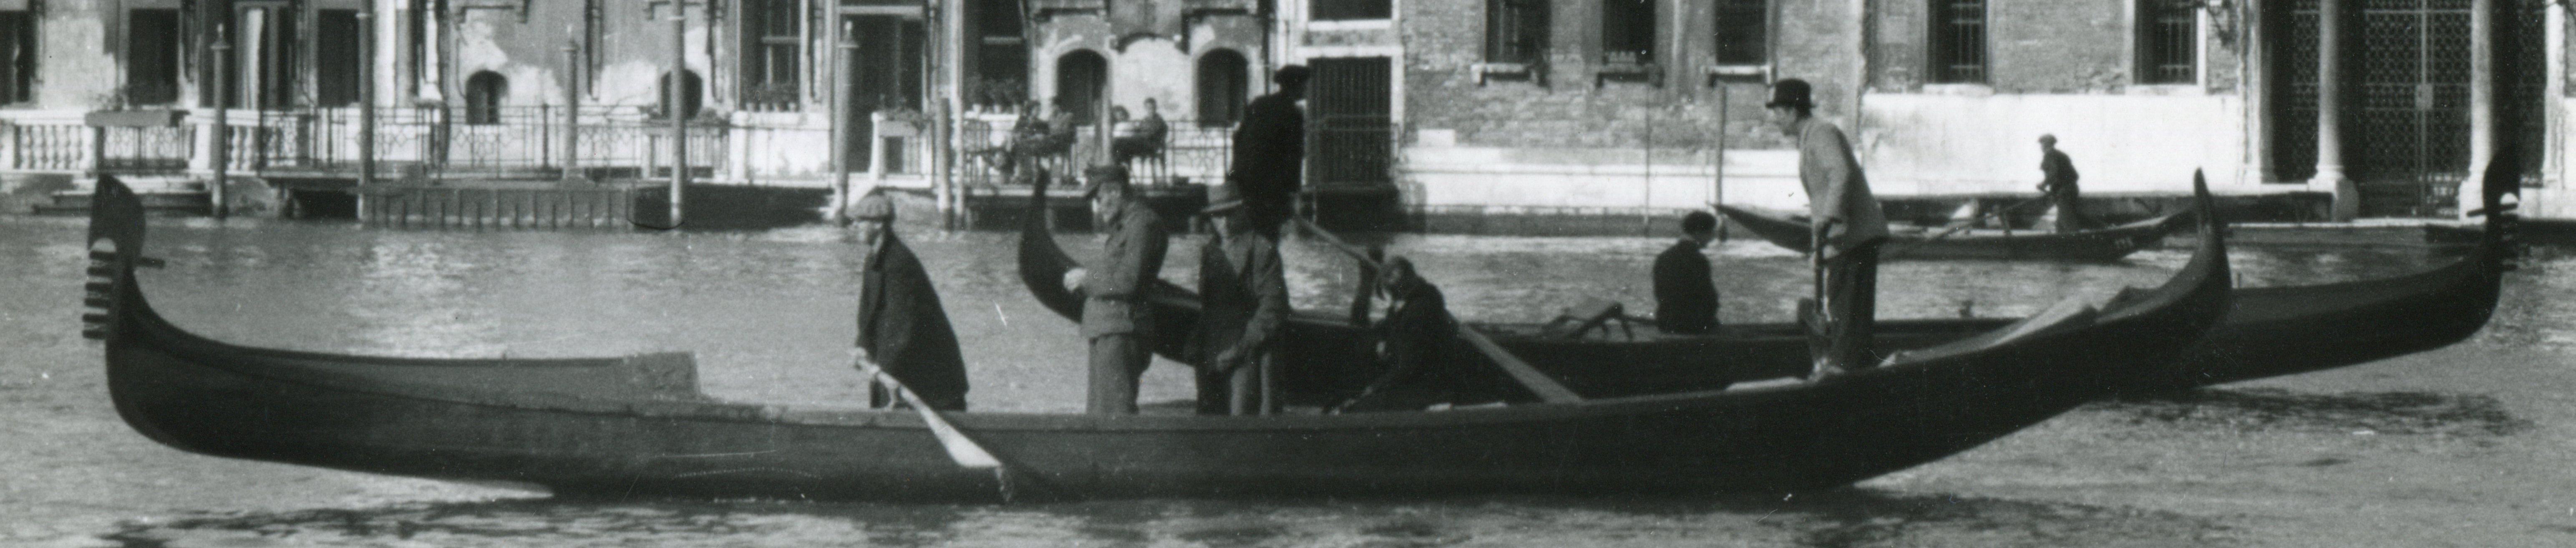 Venice - Gondola  1954 - Photograph by Erich Andres